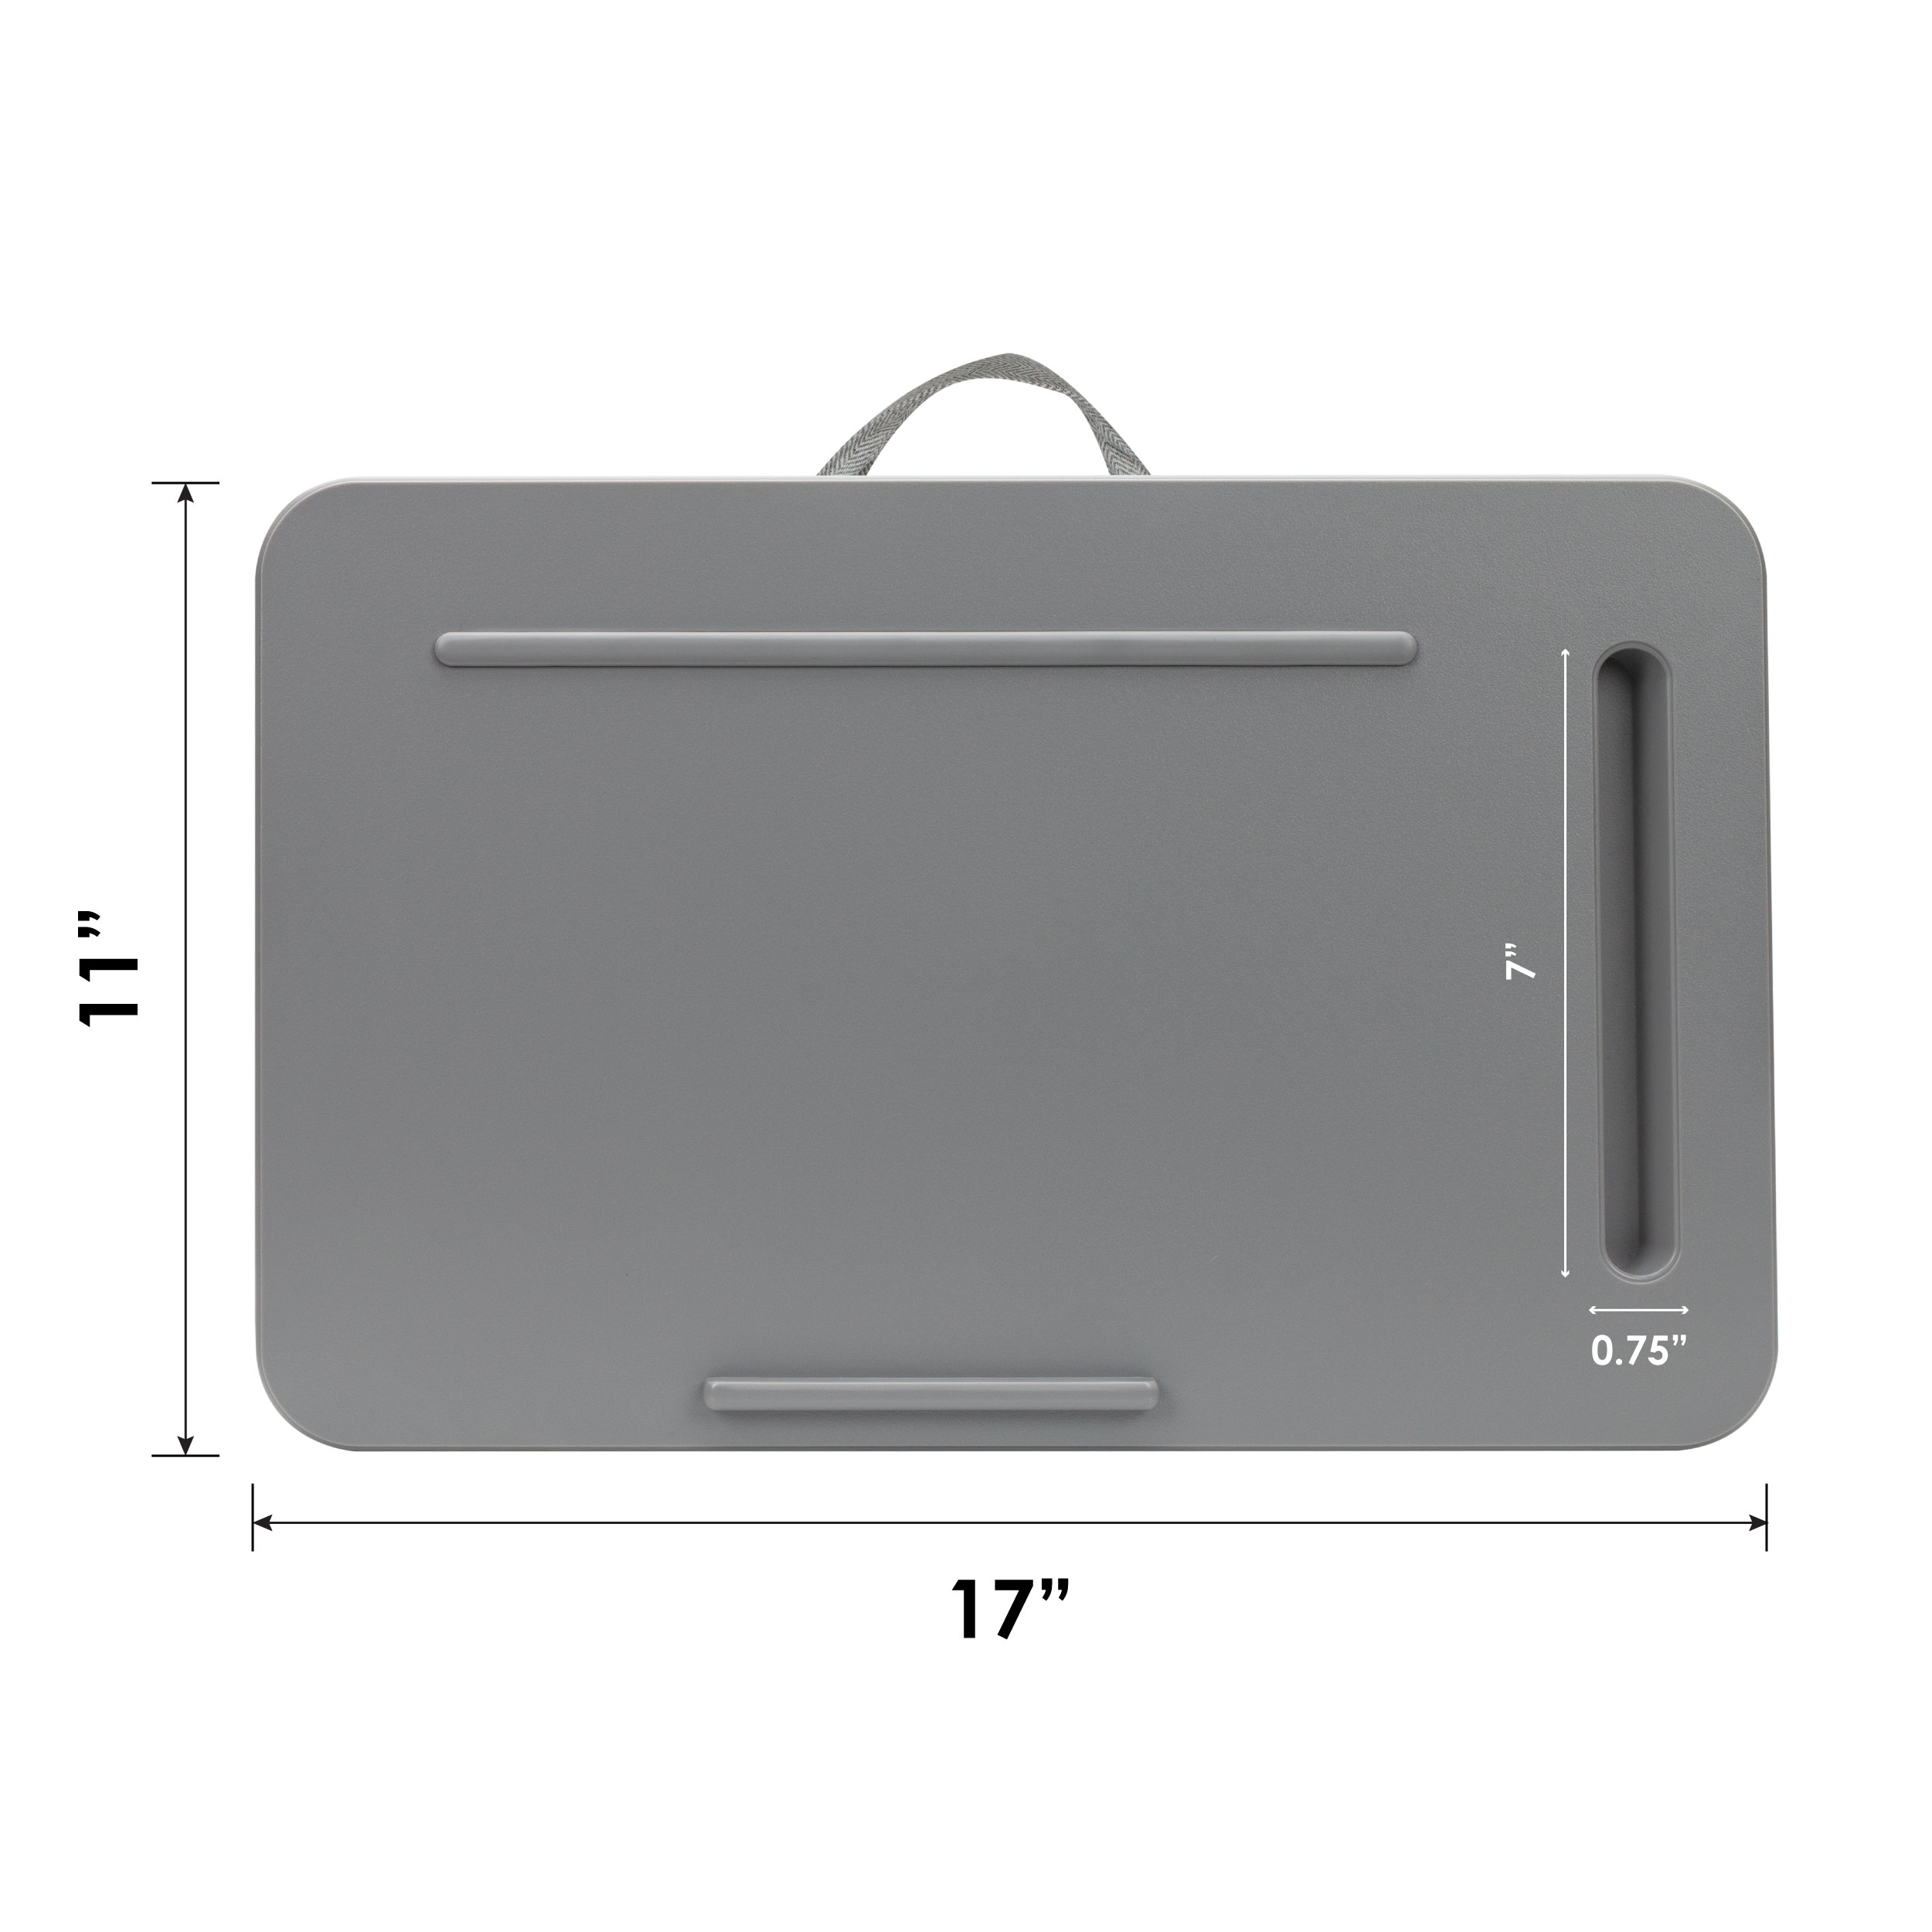 LapGear Sidekick Lap Desk for up to 15.6" Laptops, Gray - image 4 of 5